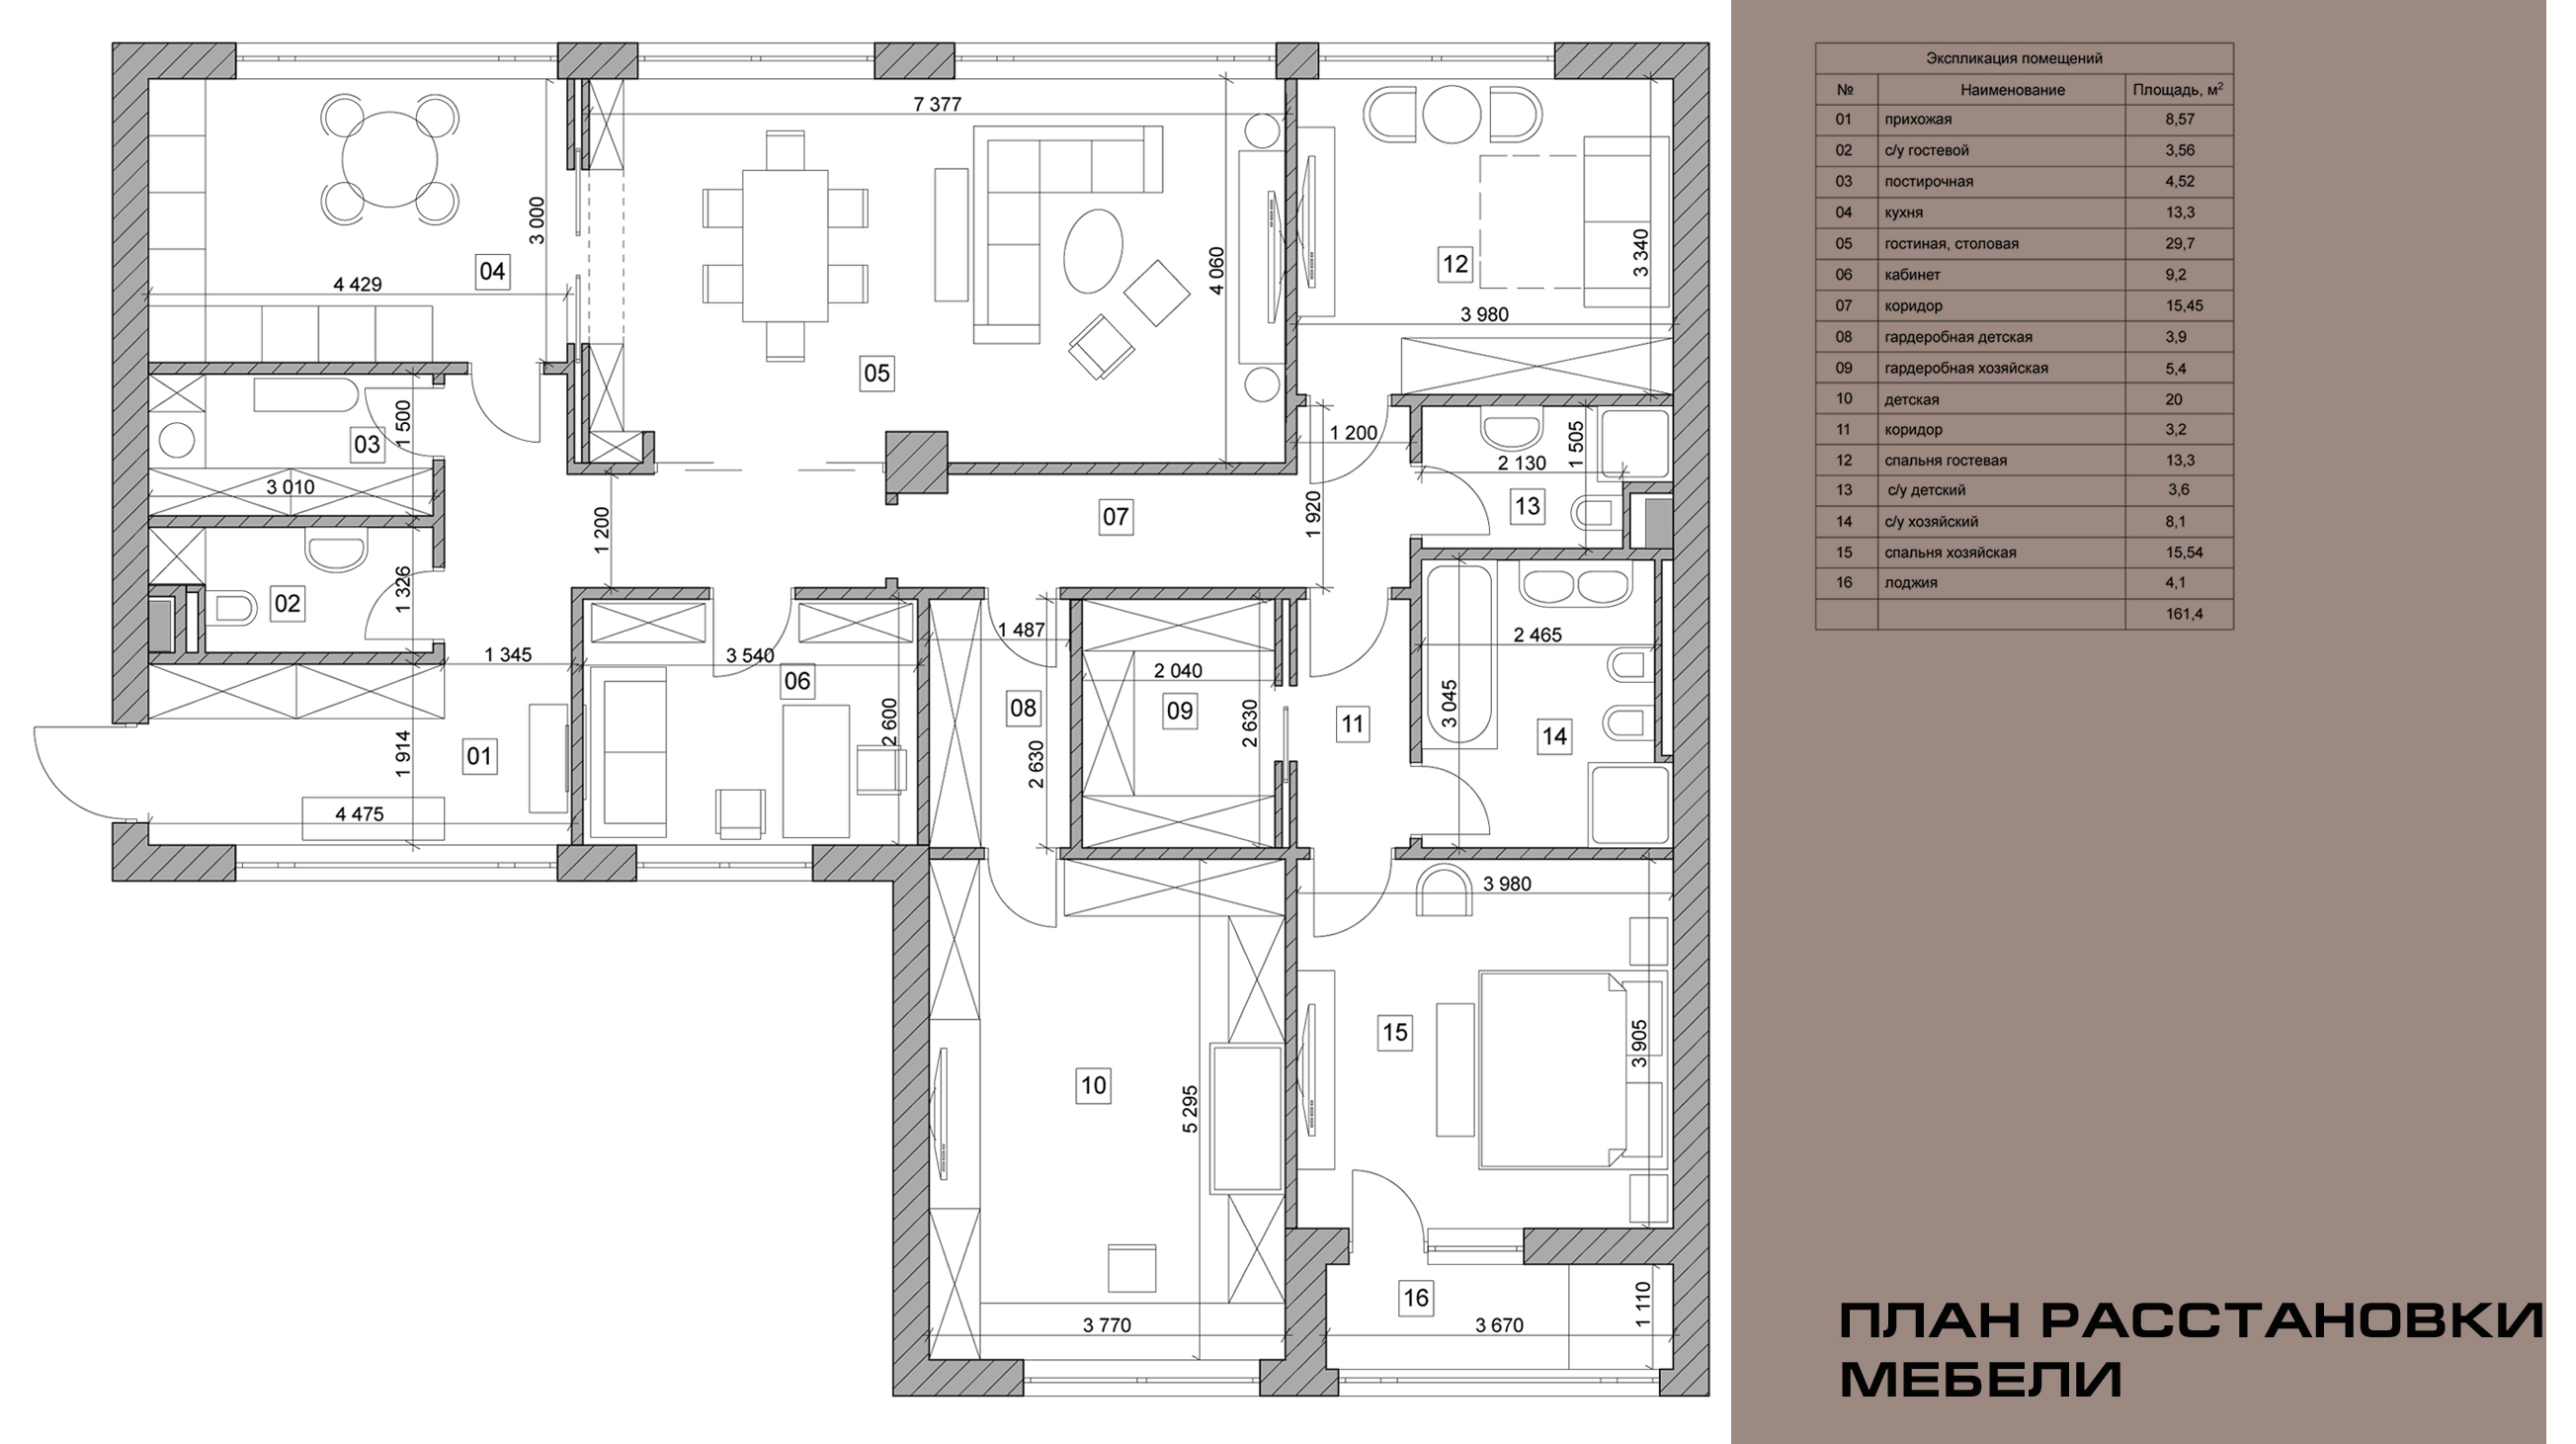 Дизайн-проект квартиры 161,7 м.кв., Москва, 2013 г.